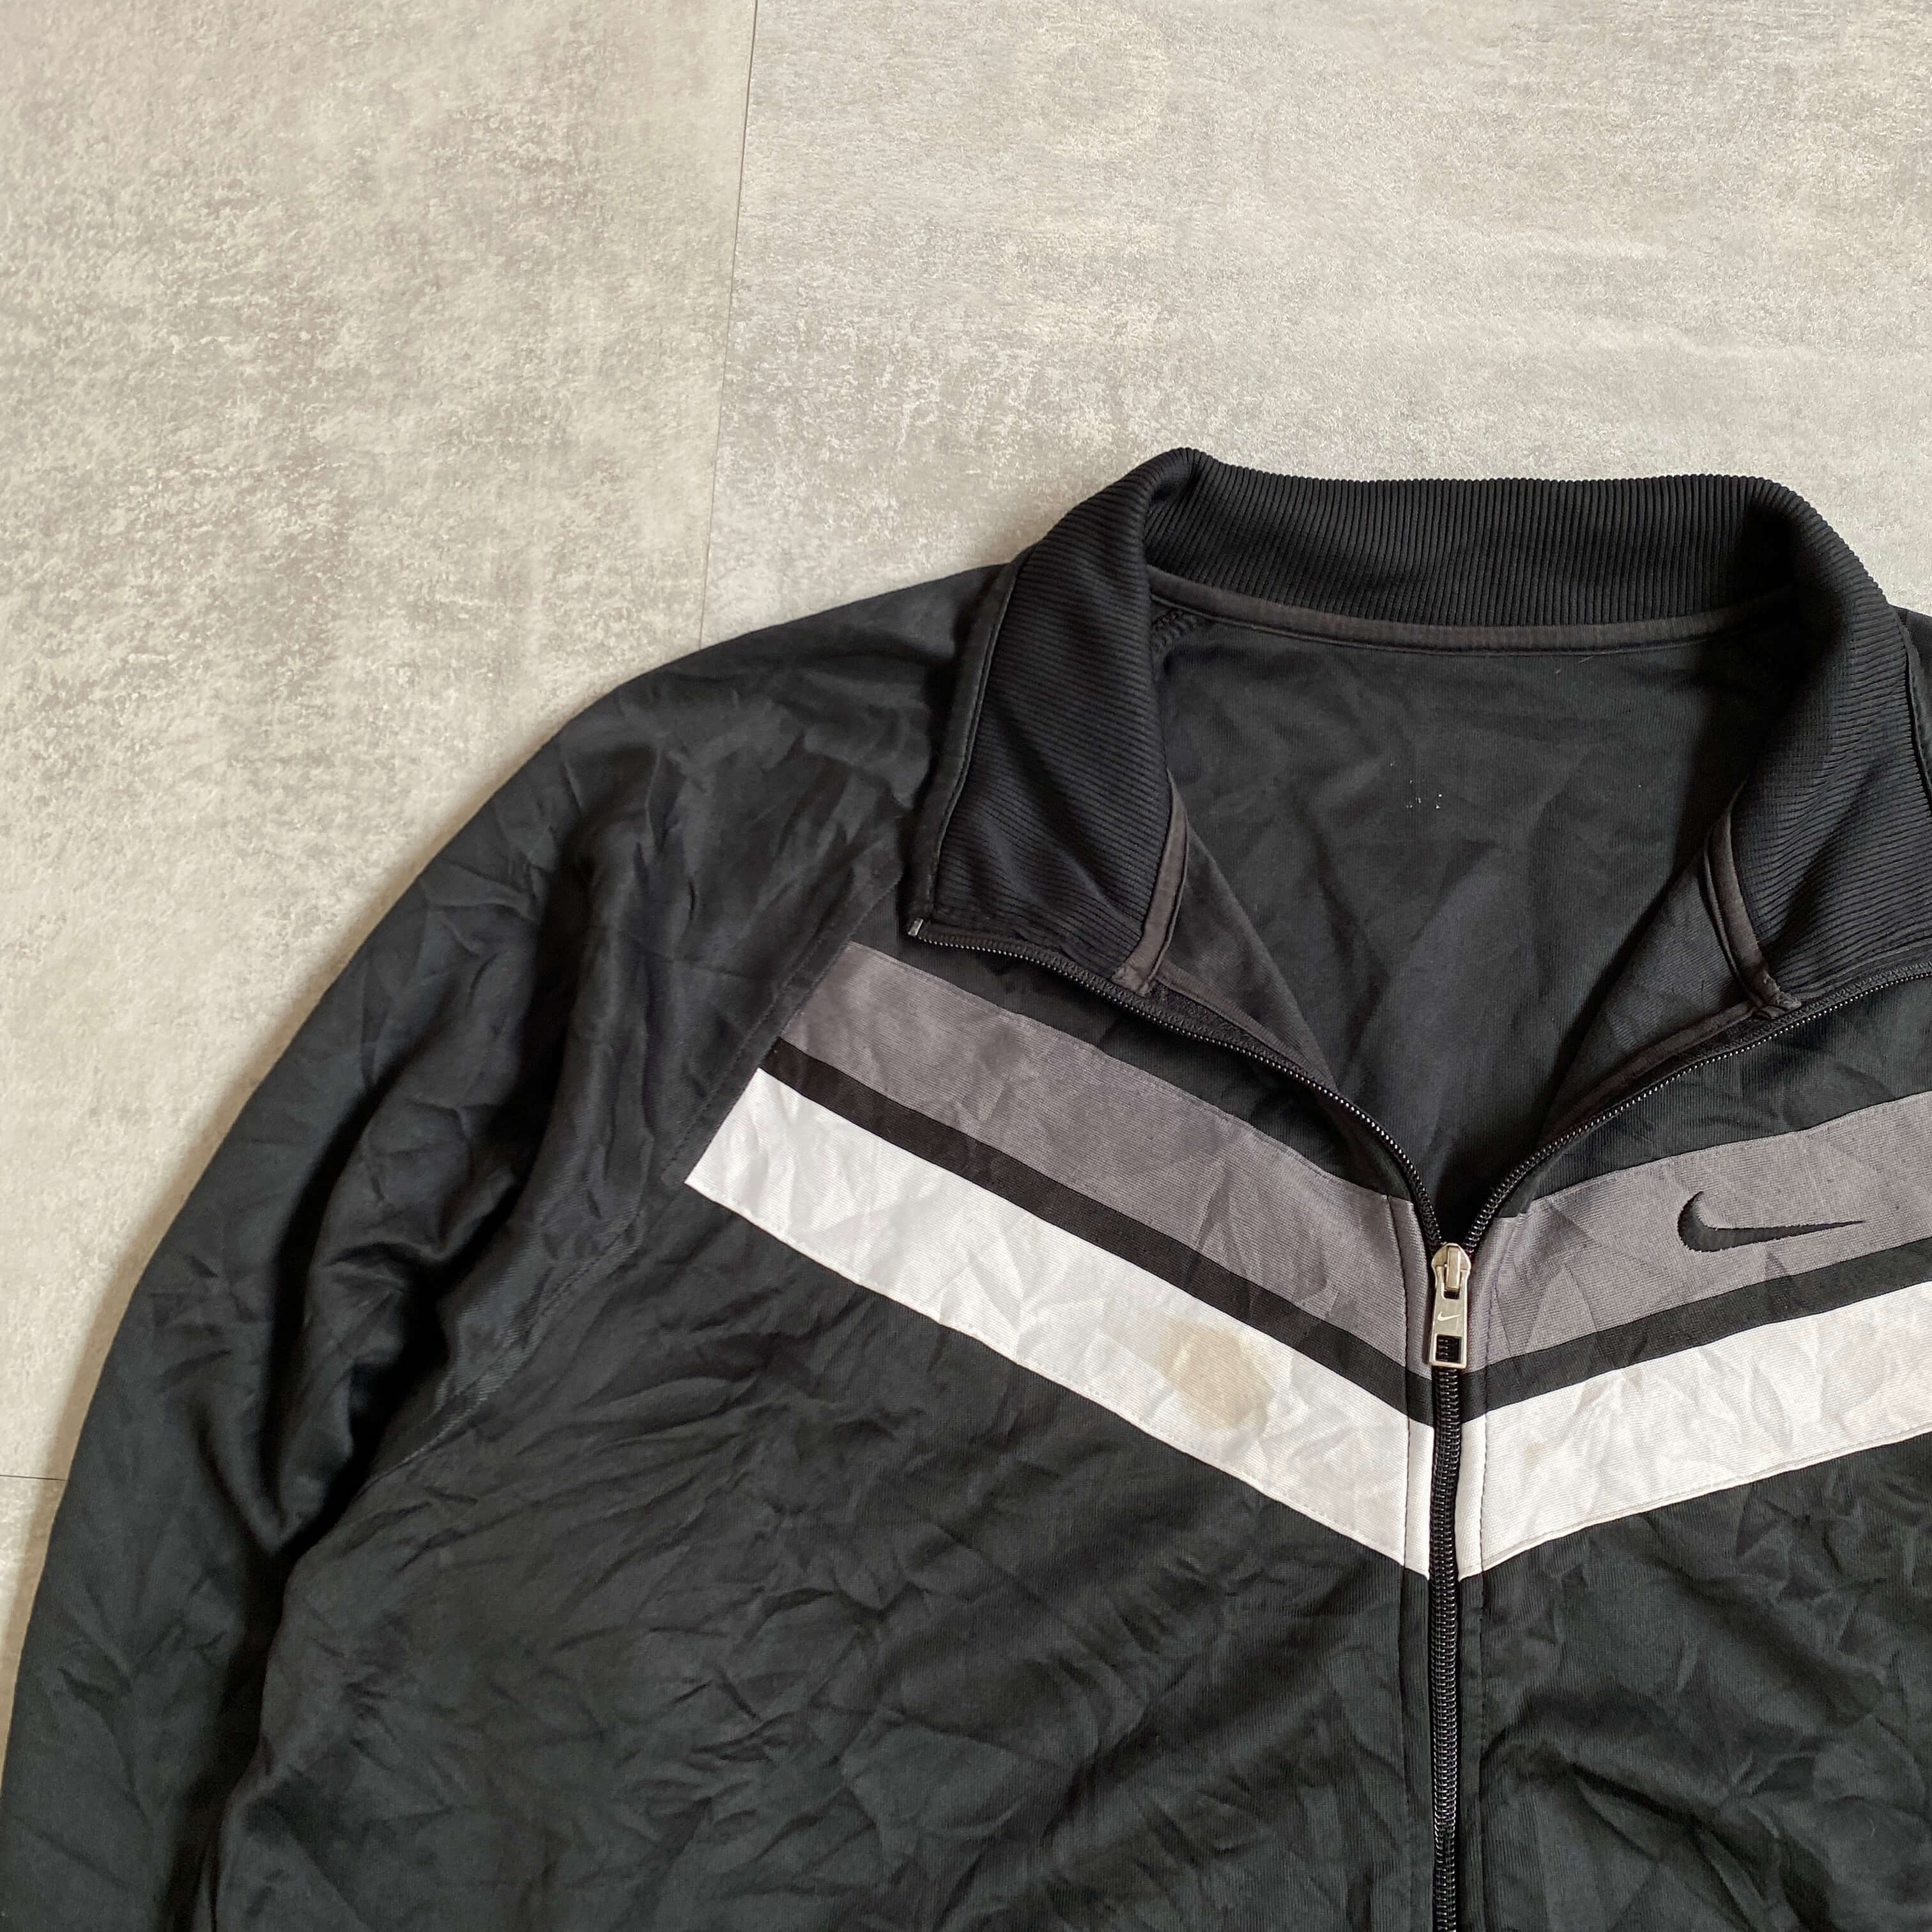 【Vintage】00s Nike Cotton track jacket